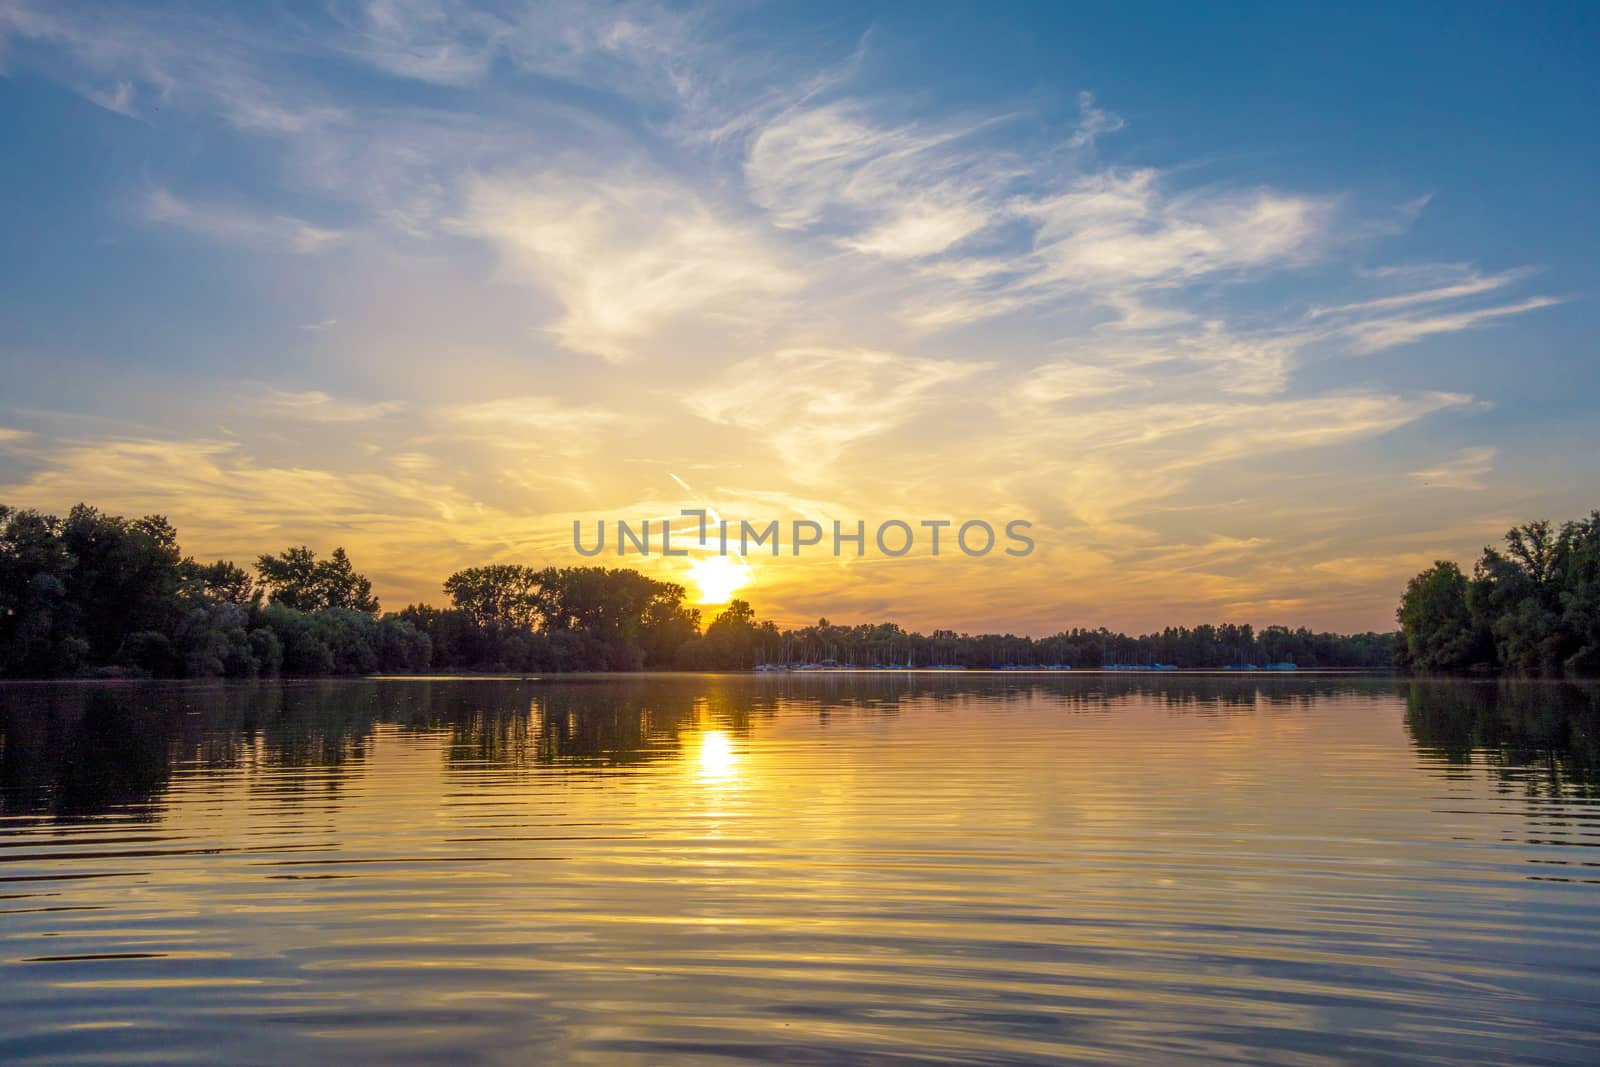 sunrise / sunset at a lake